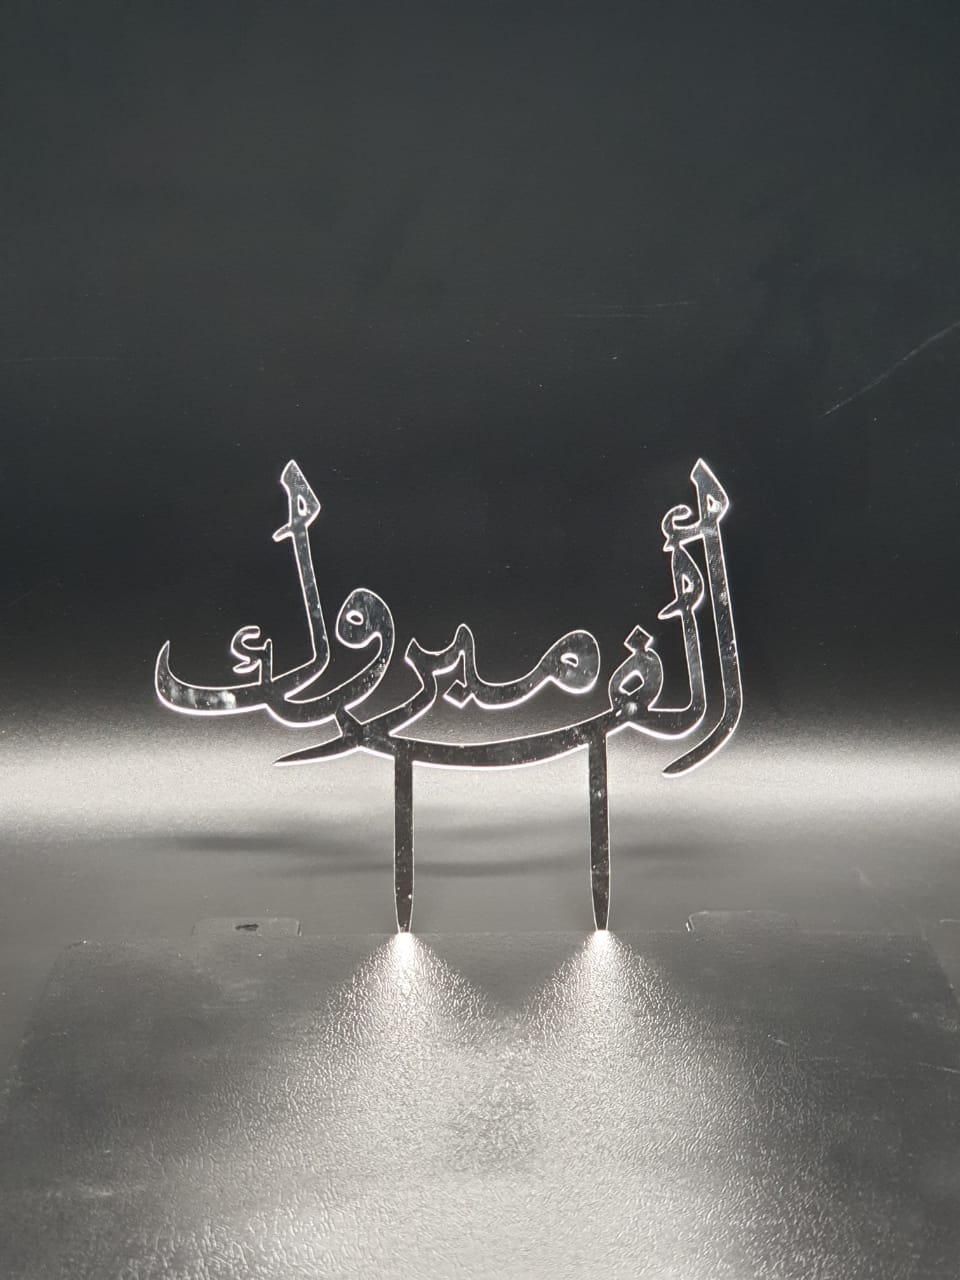 Congratulations Calligraphy Arabic Cake Topper